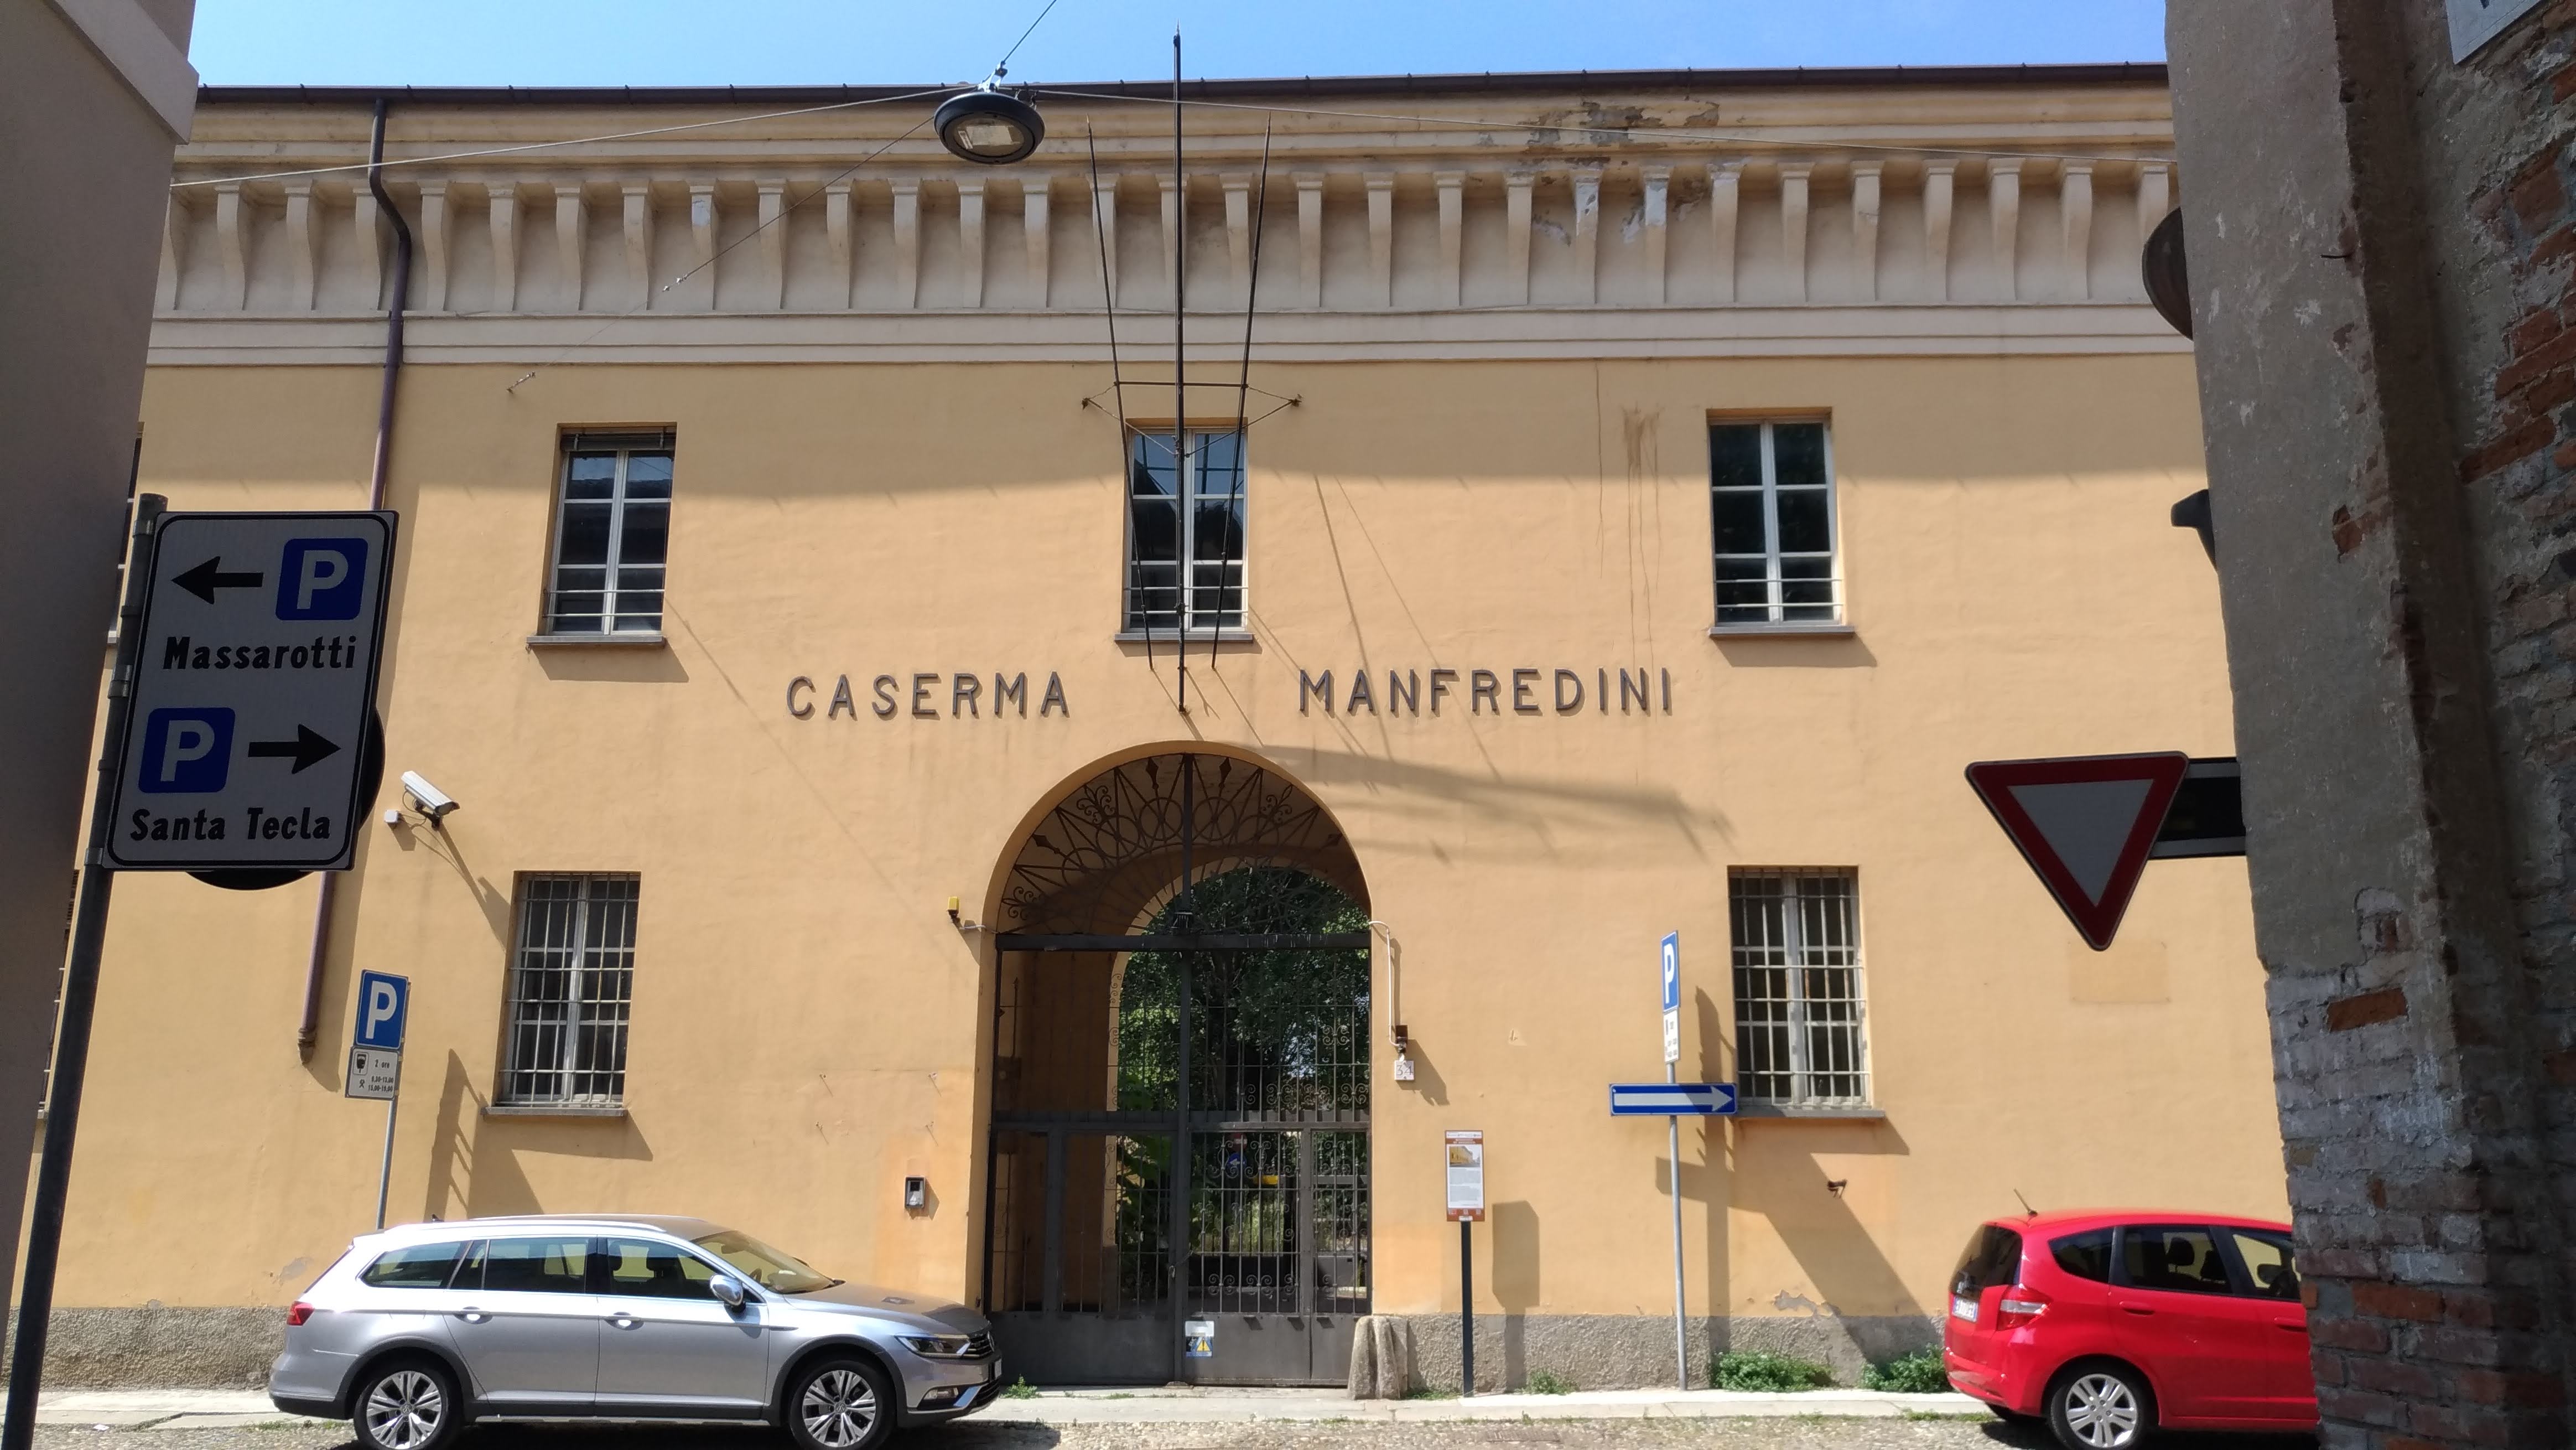 Caserma Manfredini (caserma, militare) - Cremona (CR)  (XVI; XXI)